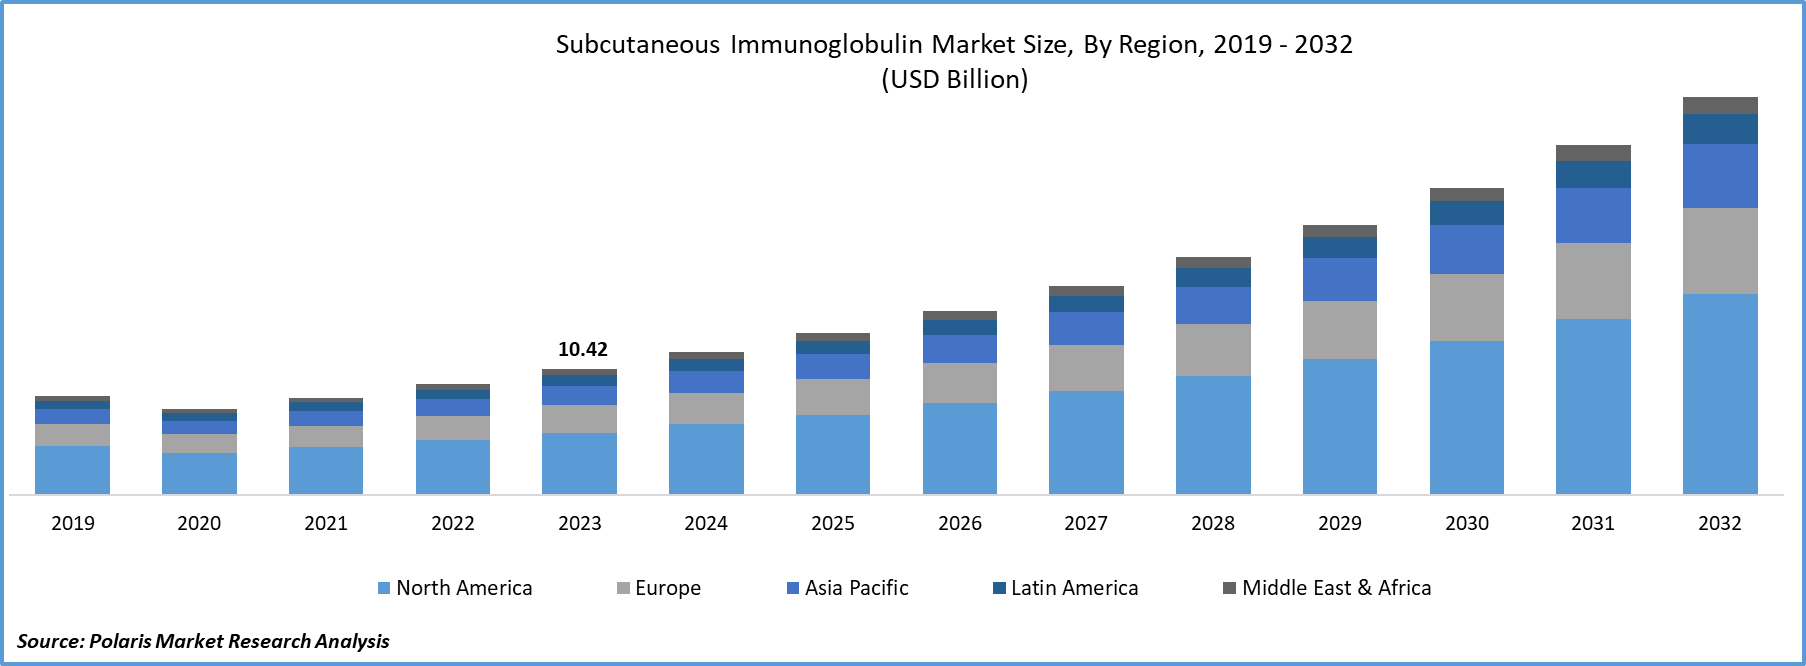 Subcutaneous Immunoglobulin Market Size